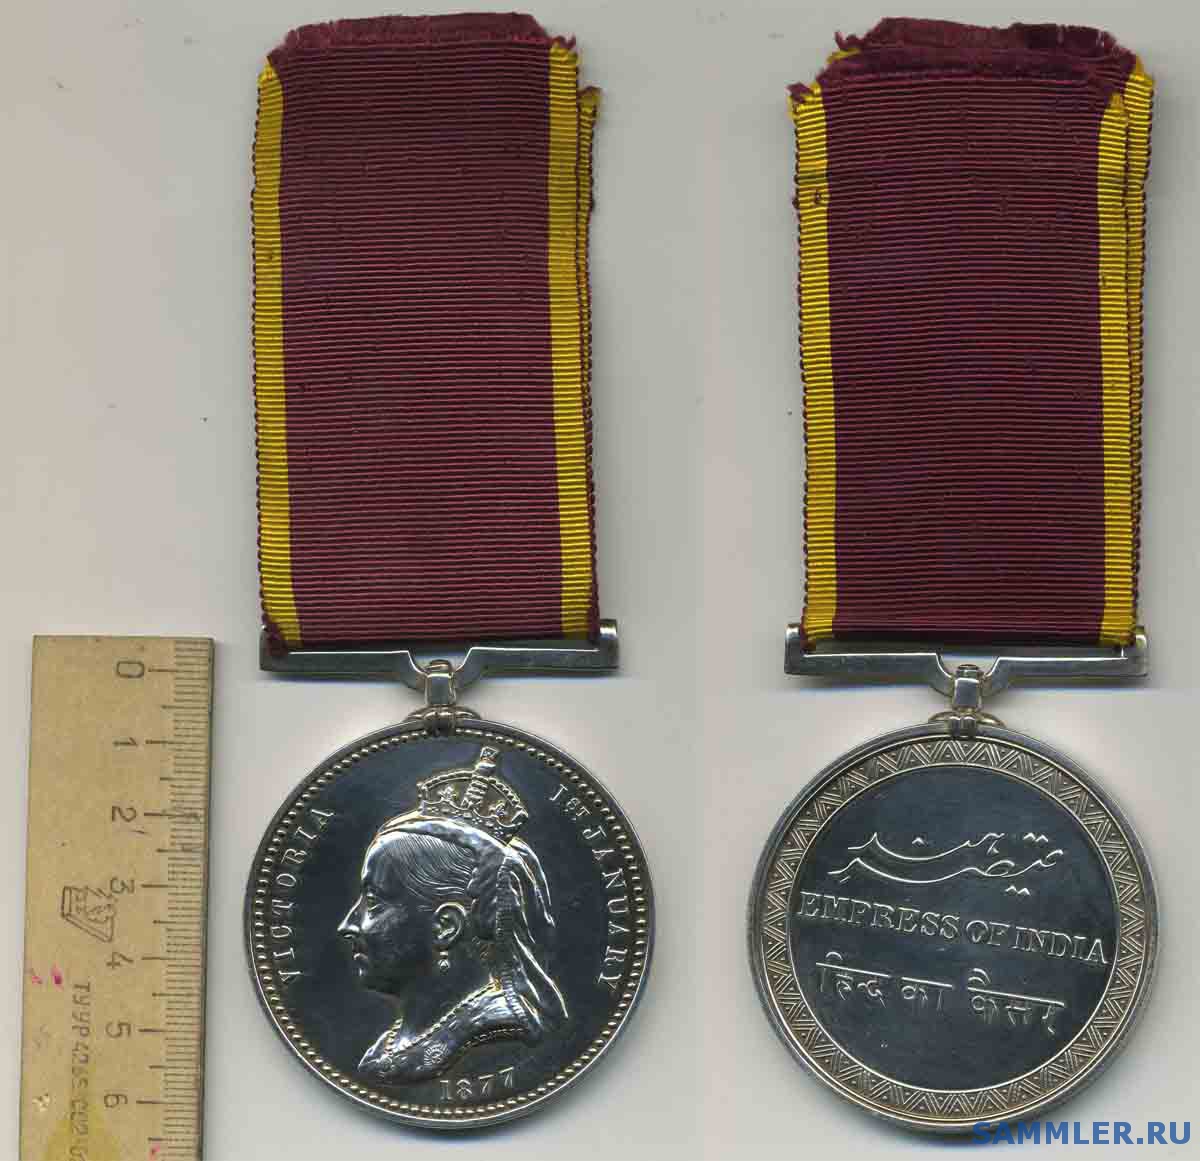 Empress_of_India_Medal_1877.jpg